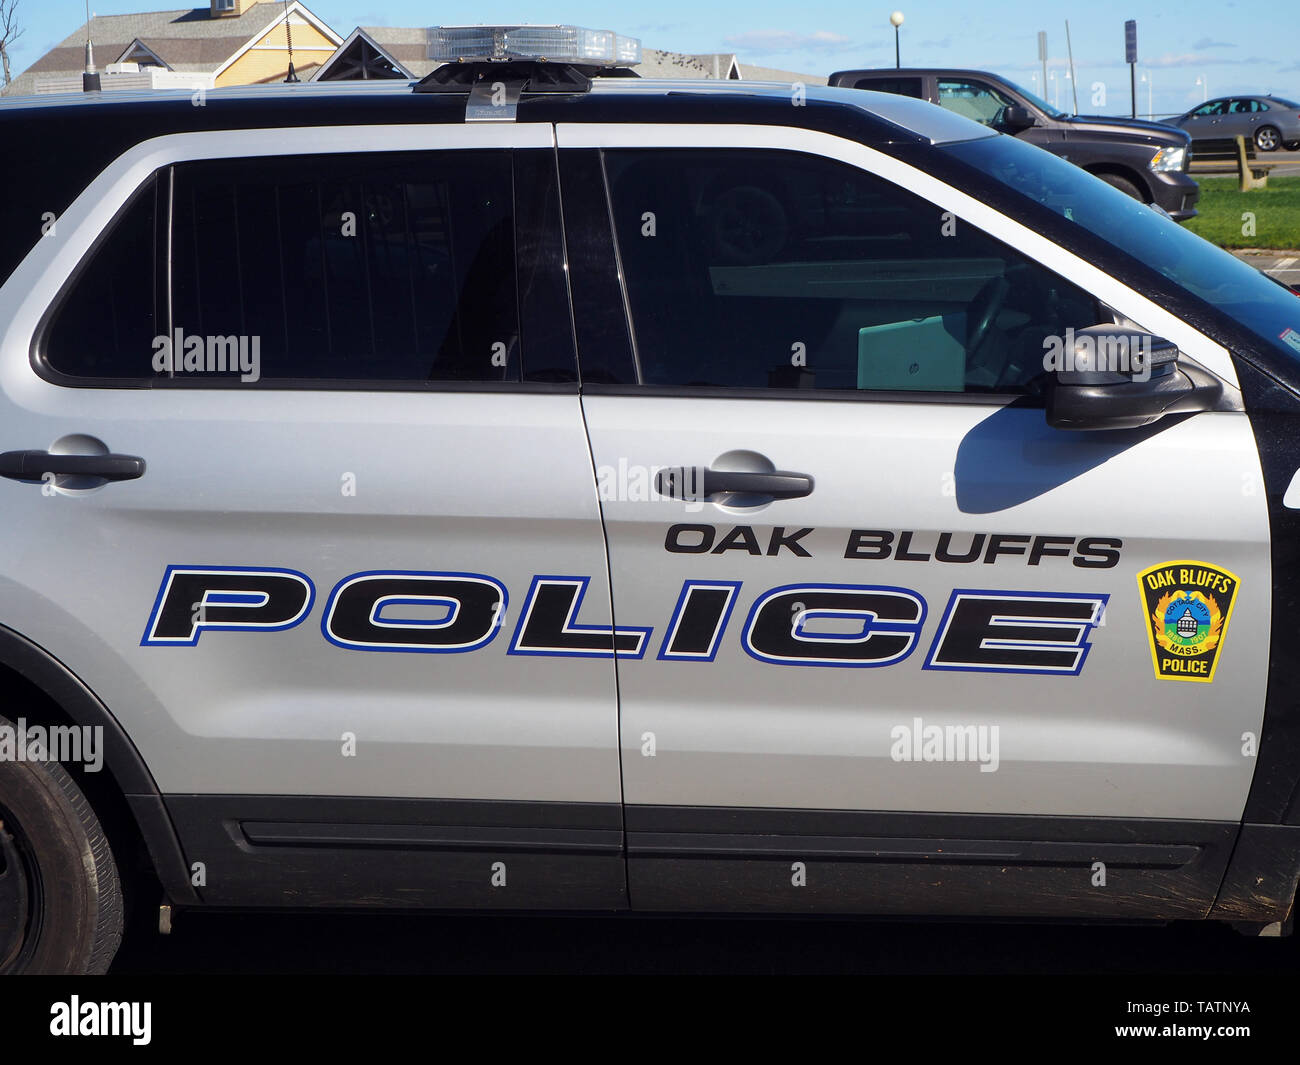 Oak Bluffs Police Department vehicle, Oak Bluffs, Marthas Vineyard, Massachusetts, USA Stock Photo